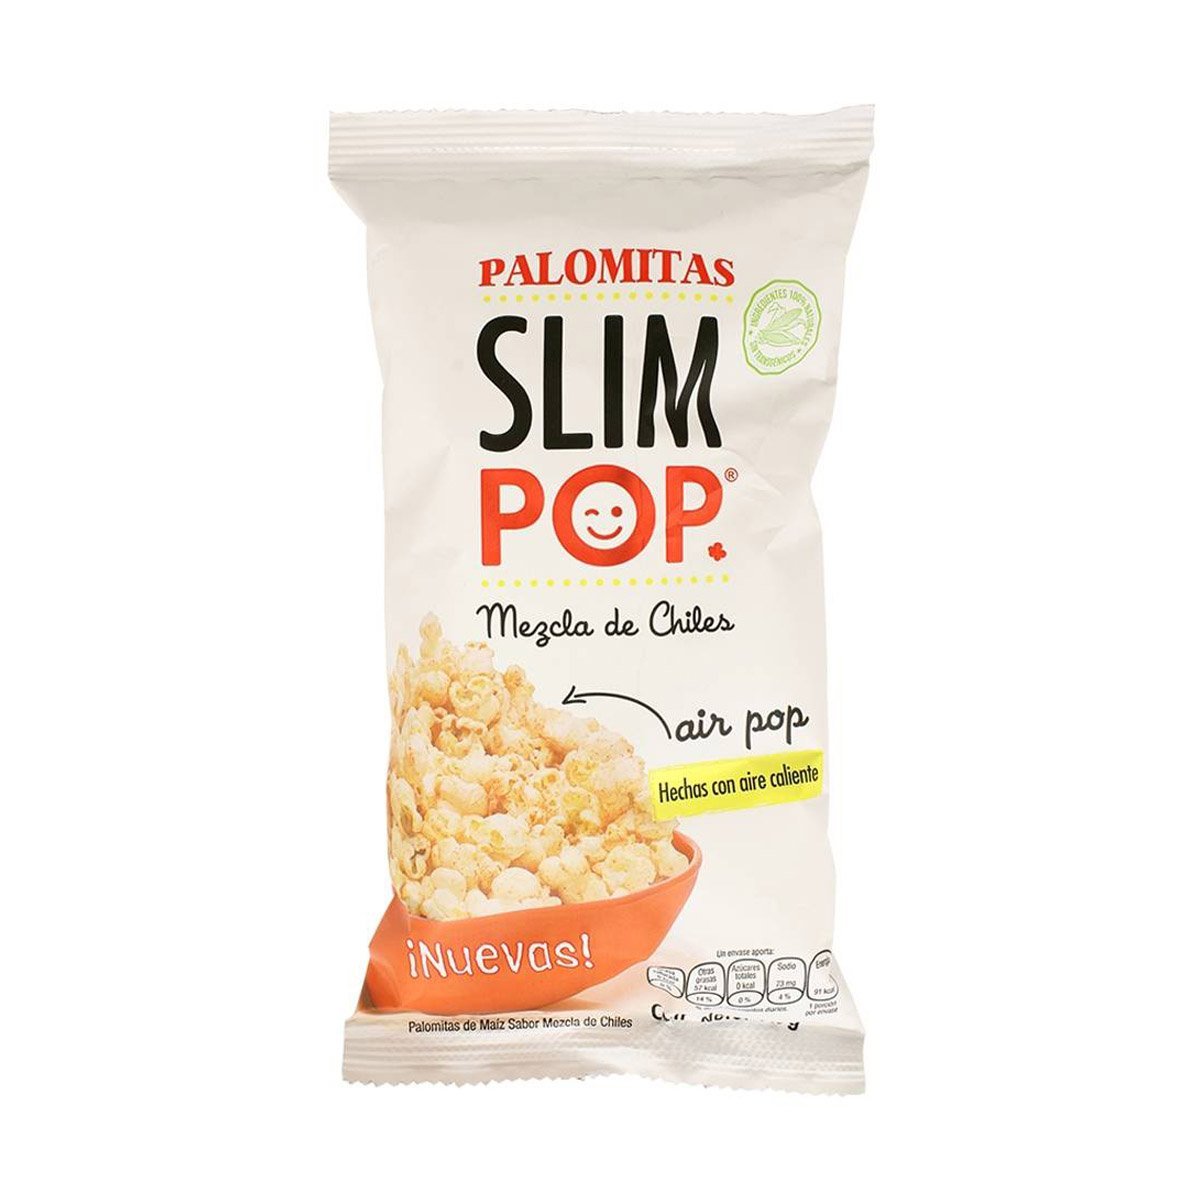 Palomitas Slim Pop Mezcla de Chiles